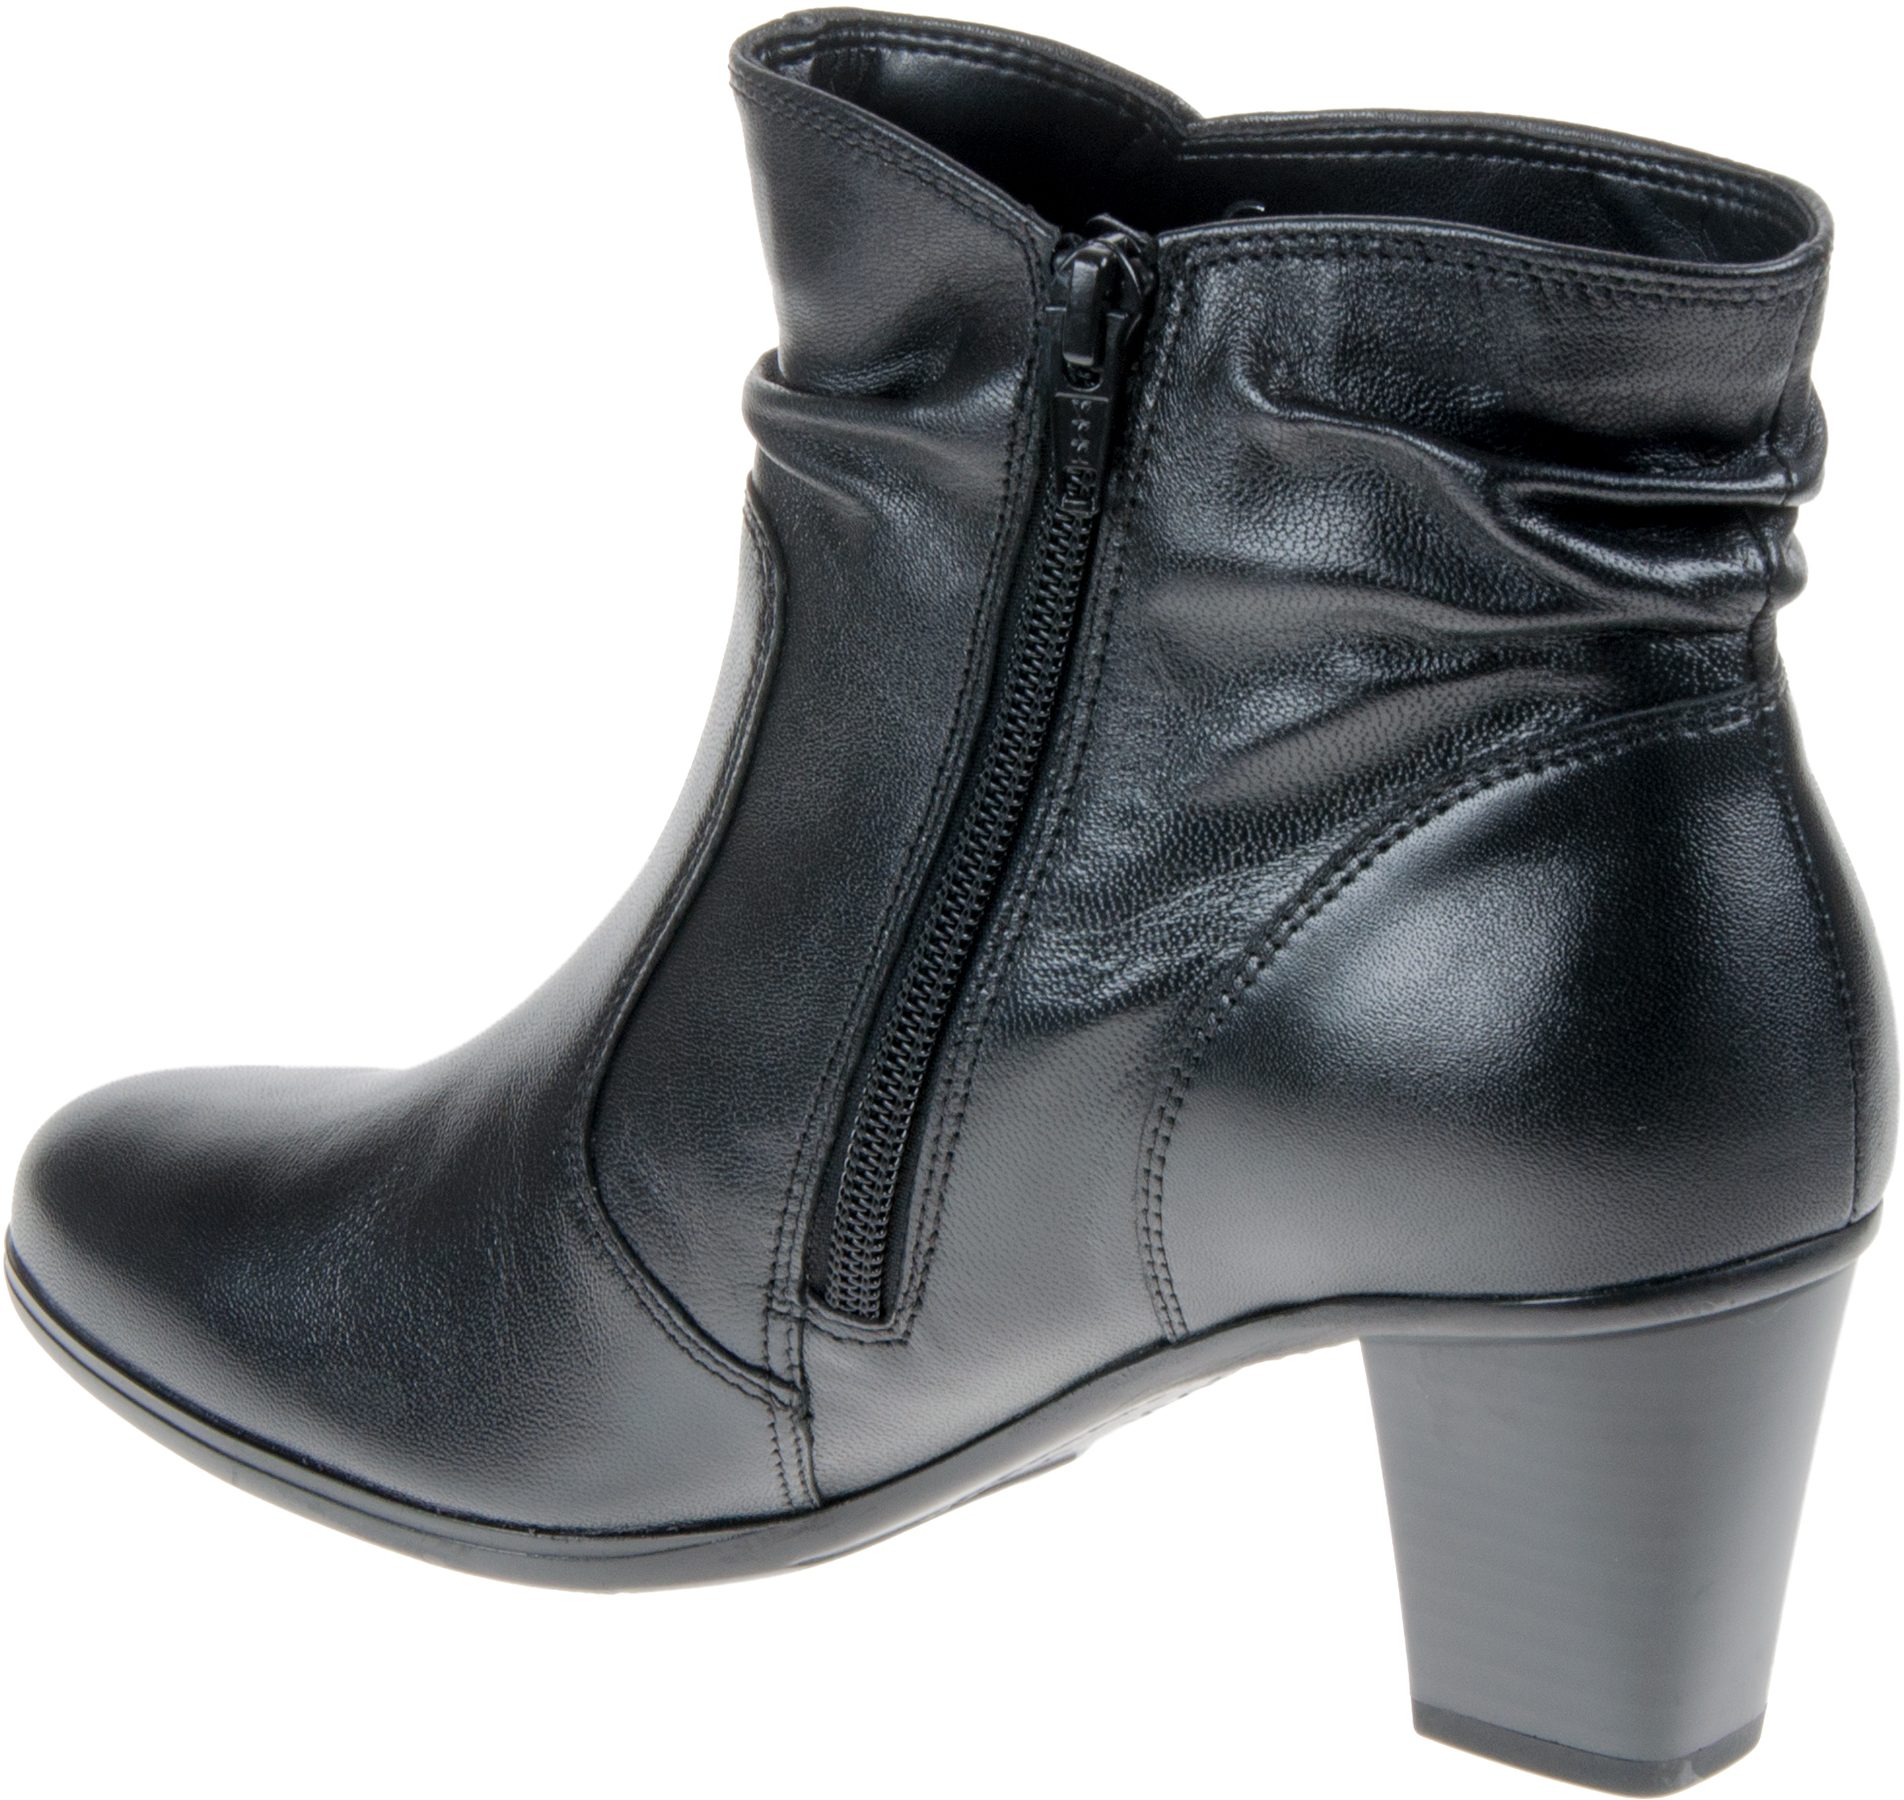 Gabor Ellie Black 75.613.27 - Ankle Boots - Humphries Shoes